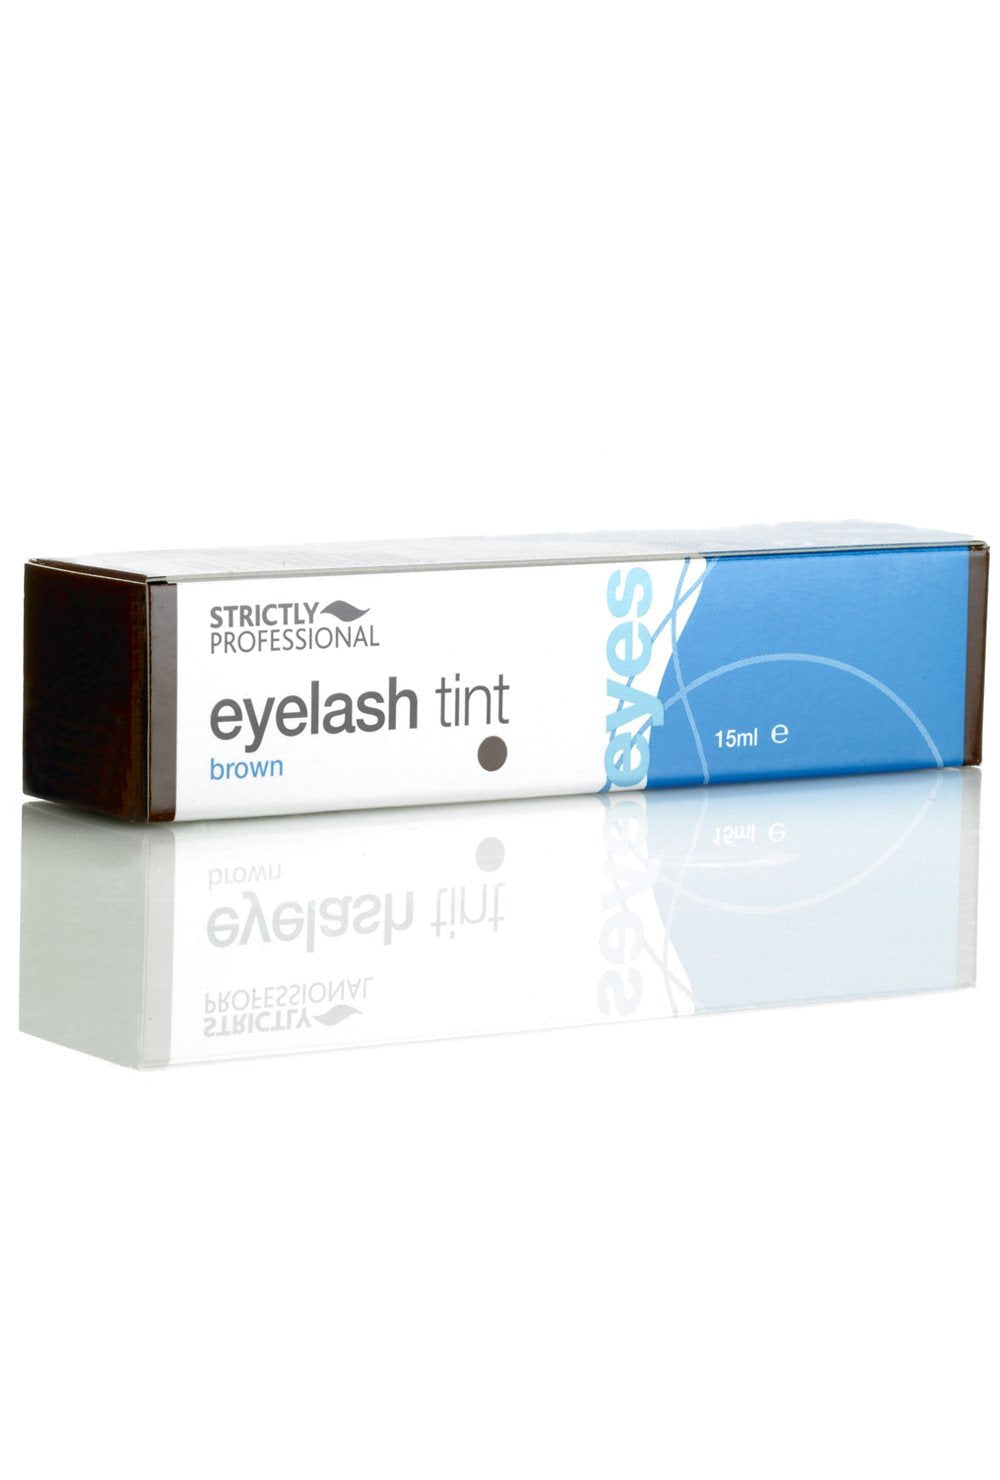 Strictly Professional Eyelash Tint Brown (15ml)